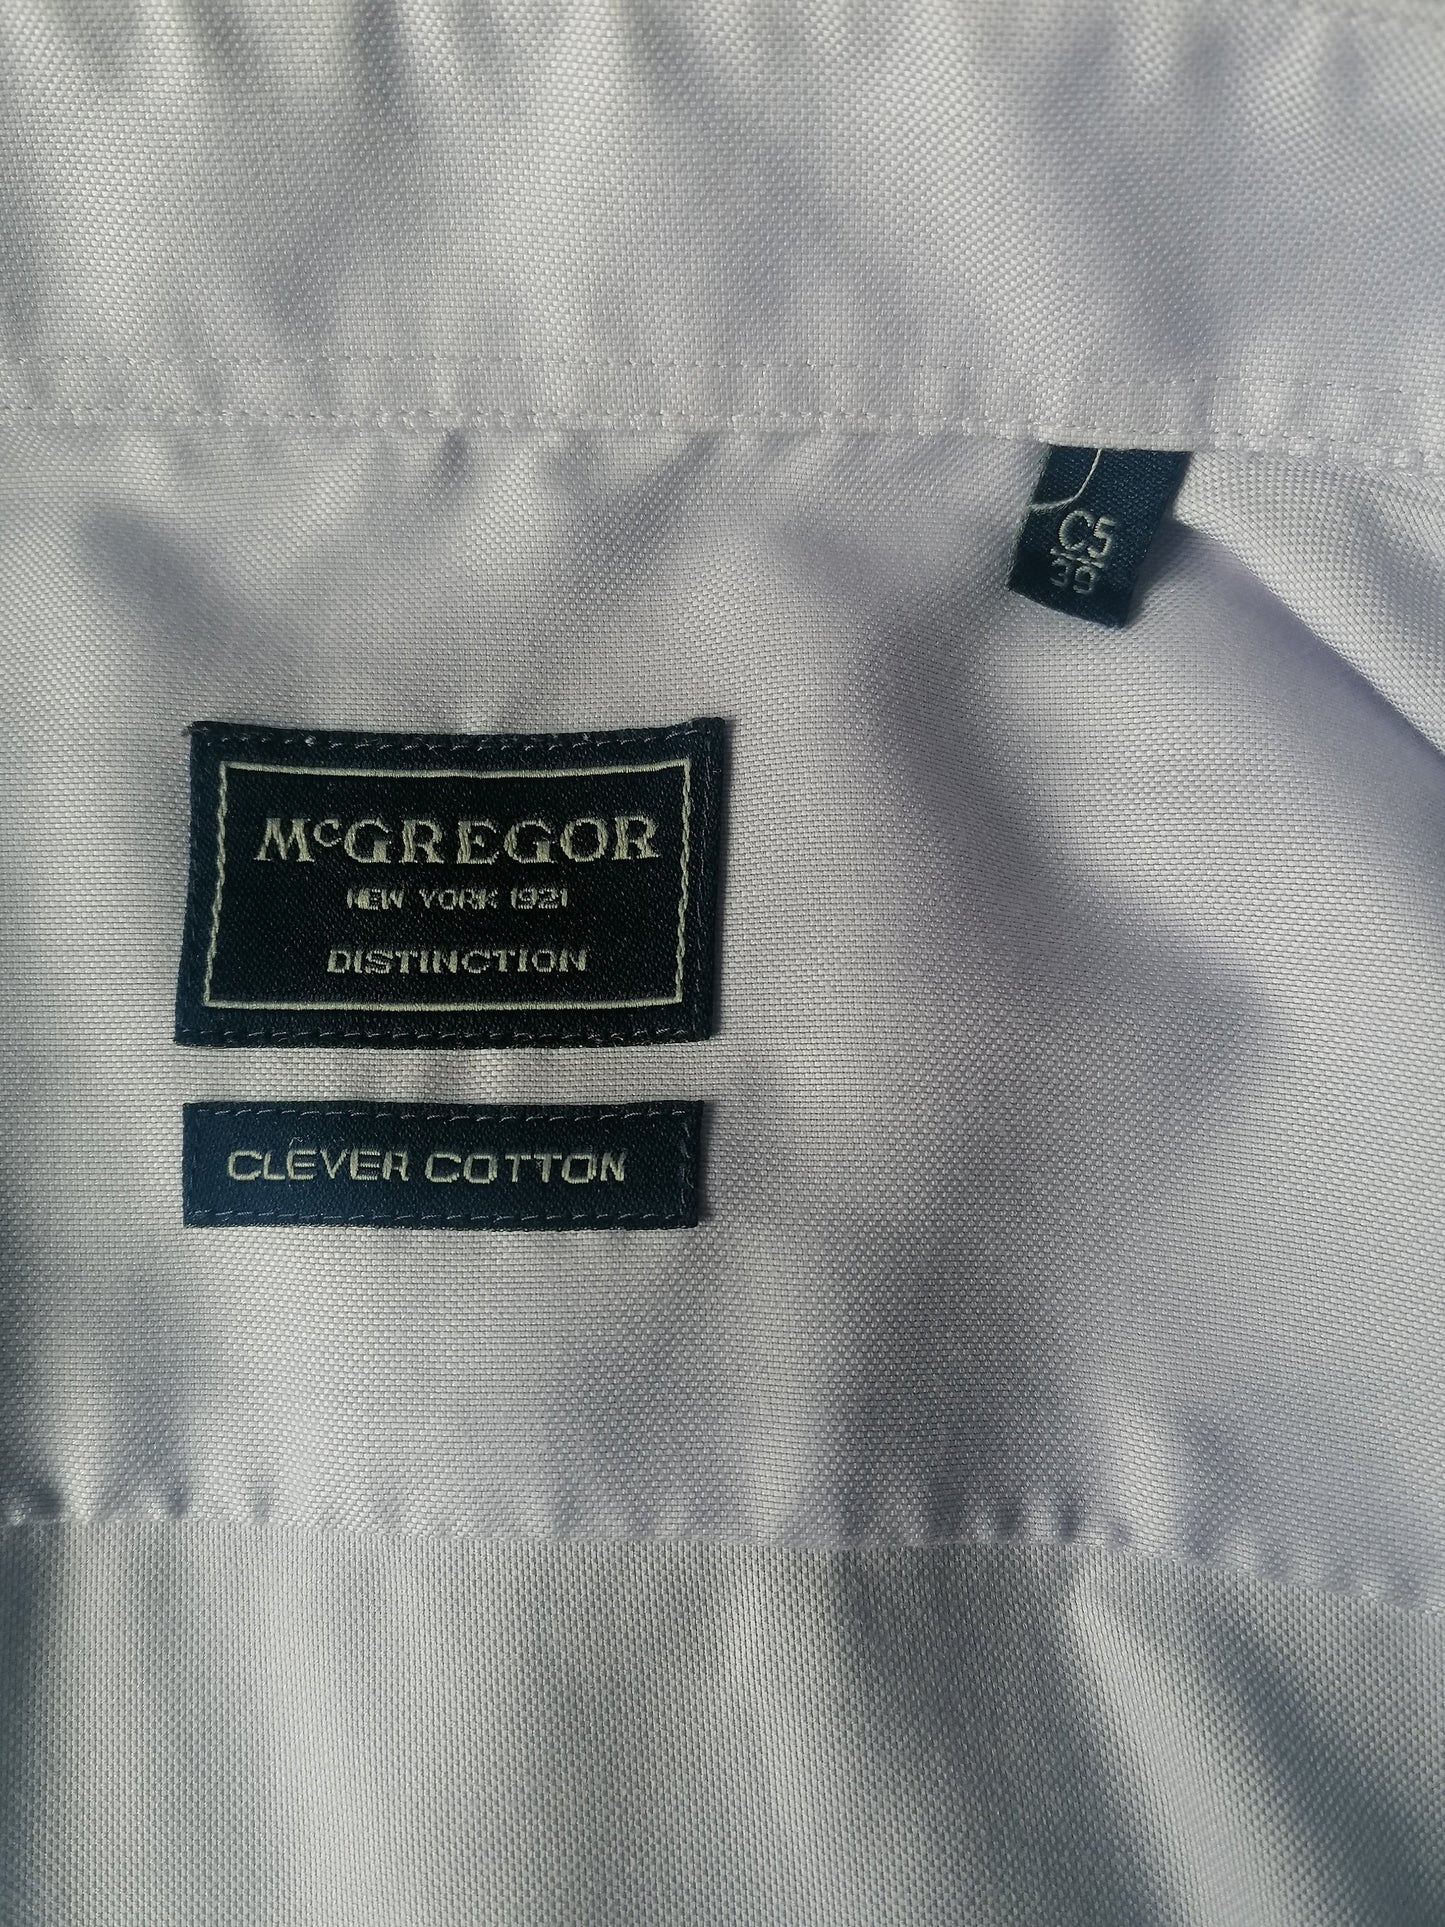 McGregor Distinction Shirt. Lila / viola chiaro colorato. Taglia 39 / M.